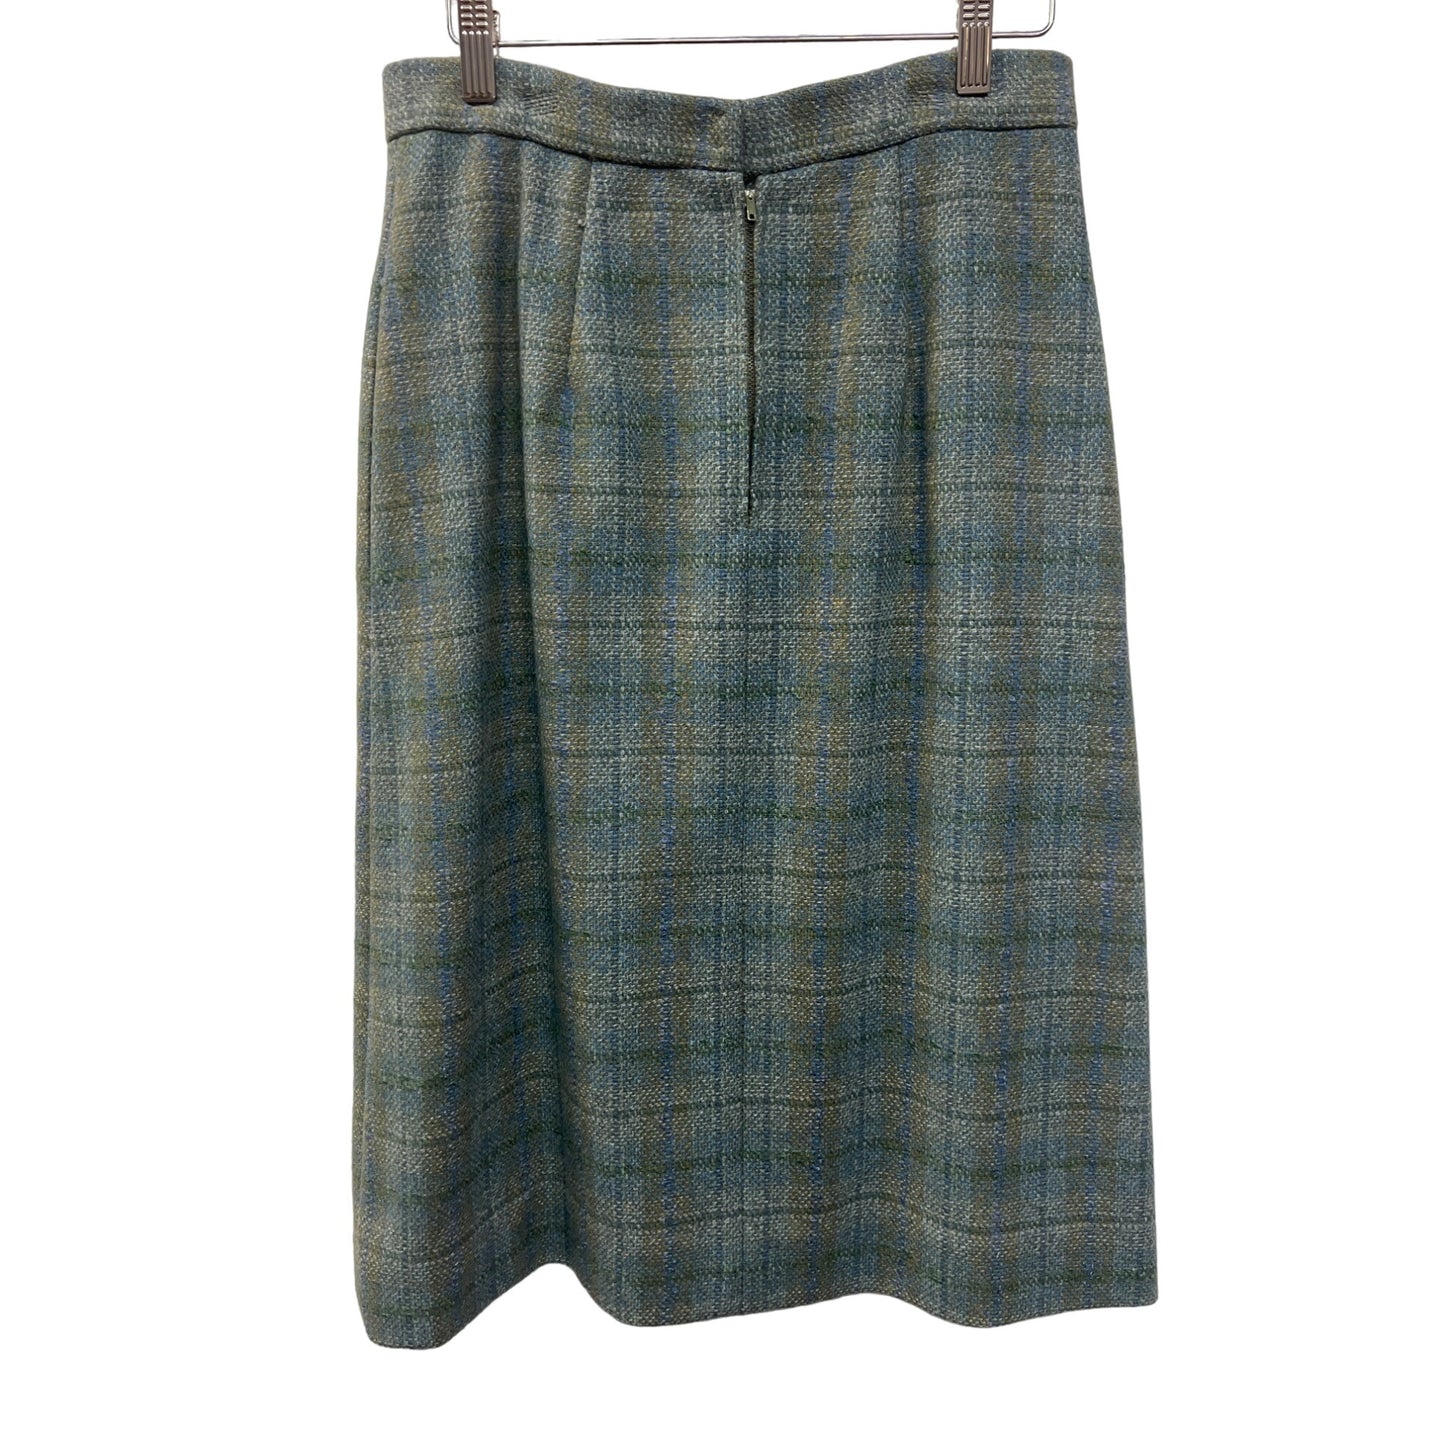 Unbranded Vintage Green Blue Plaid Wool A-Line Skirt